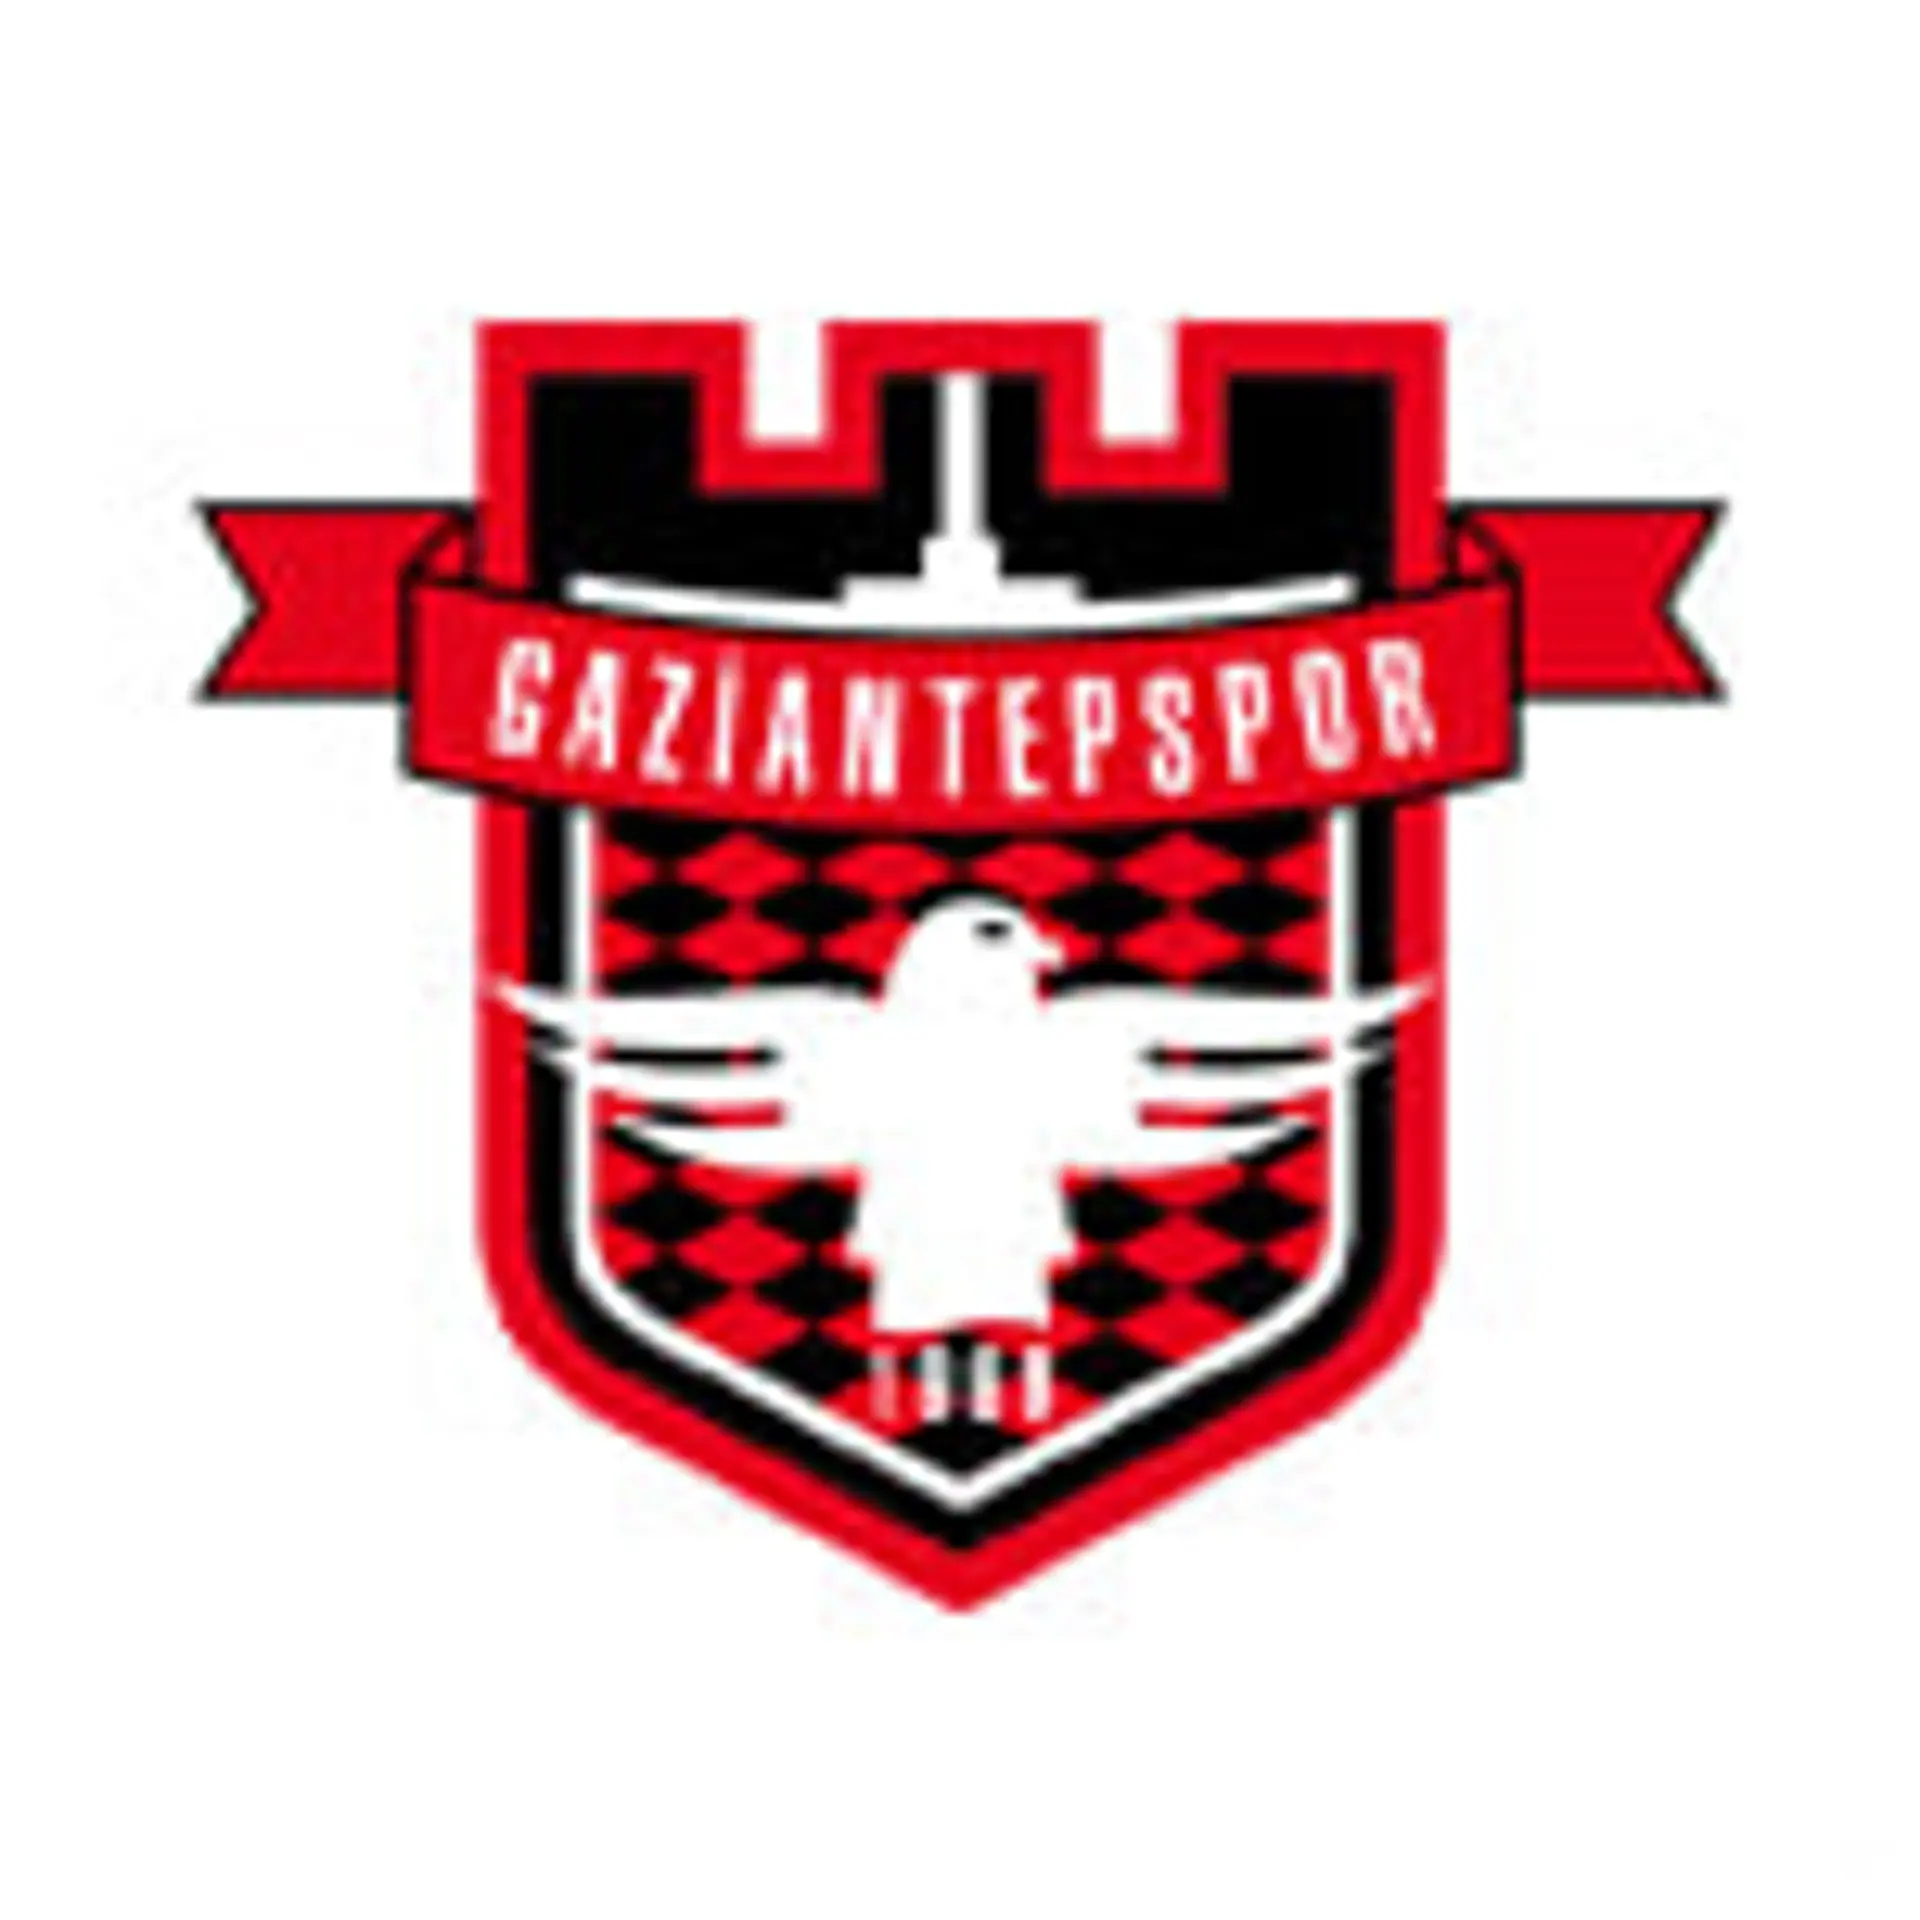 Gaziantepspor Squad